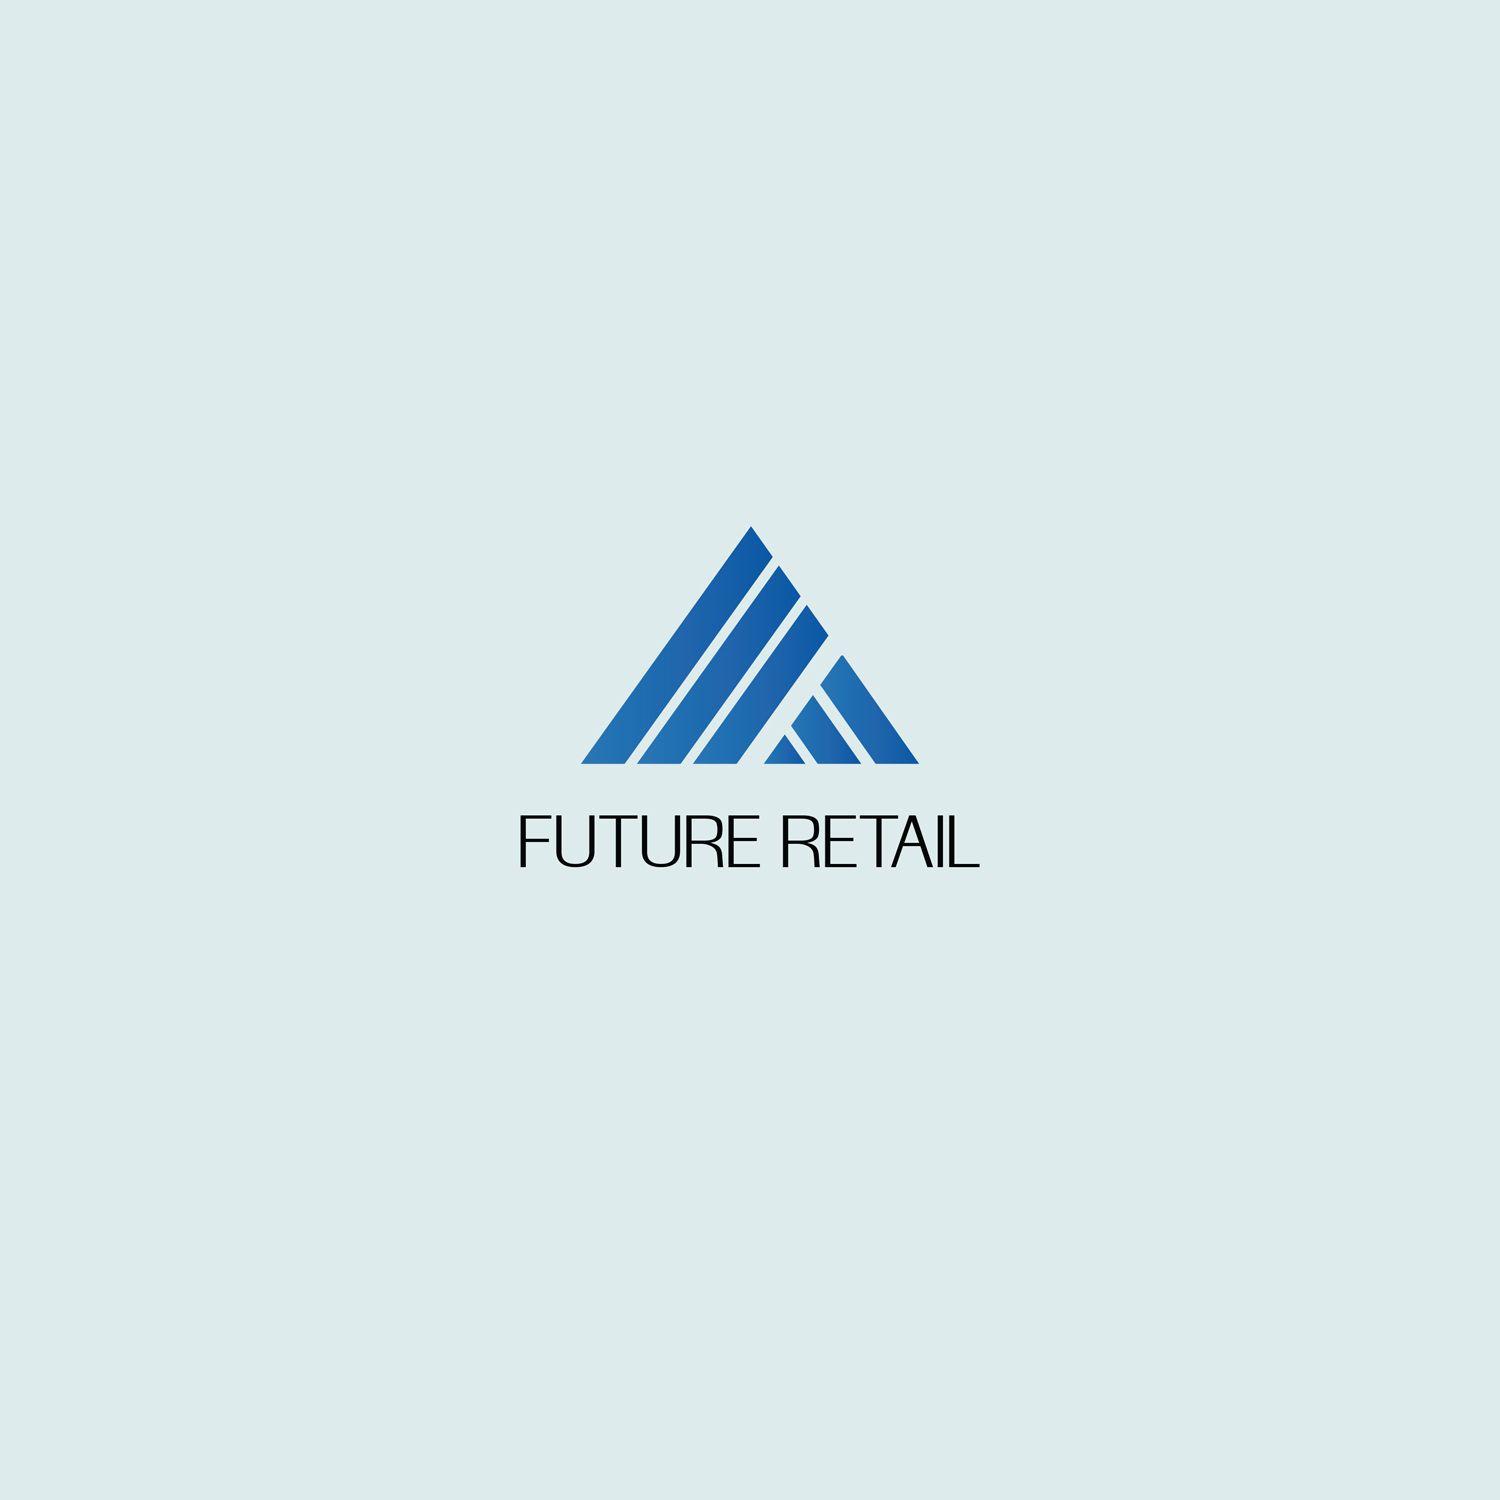 Consumer Logo - Elegant, Modern, Consumer Logo Design for Future Retail